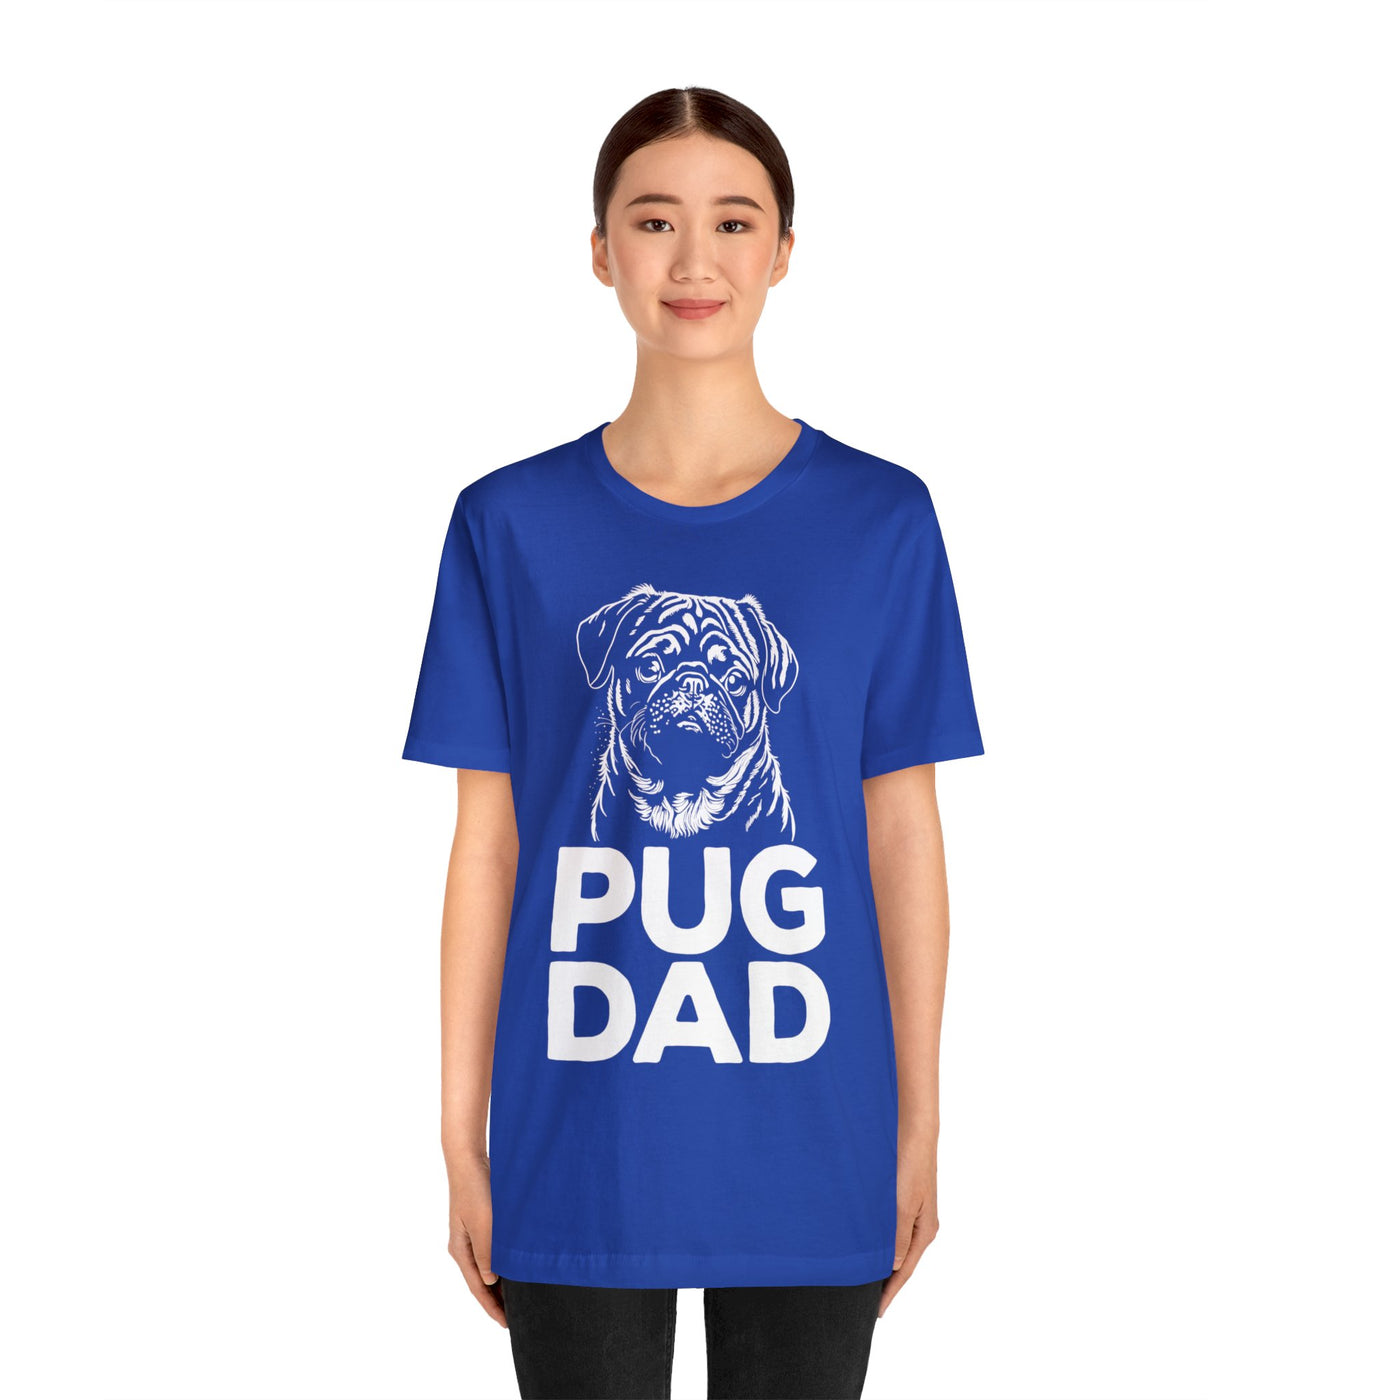 Pug Dad T-Shirt